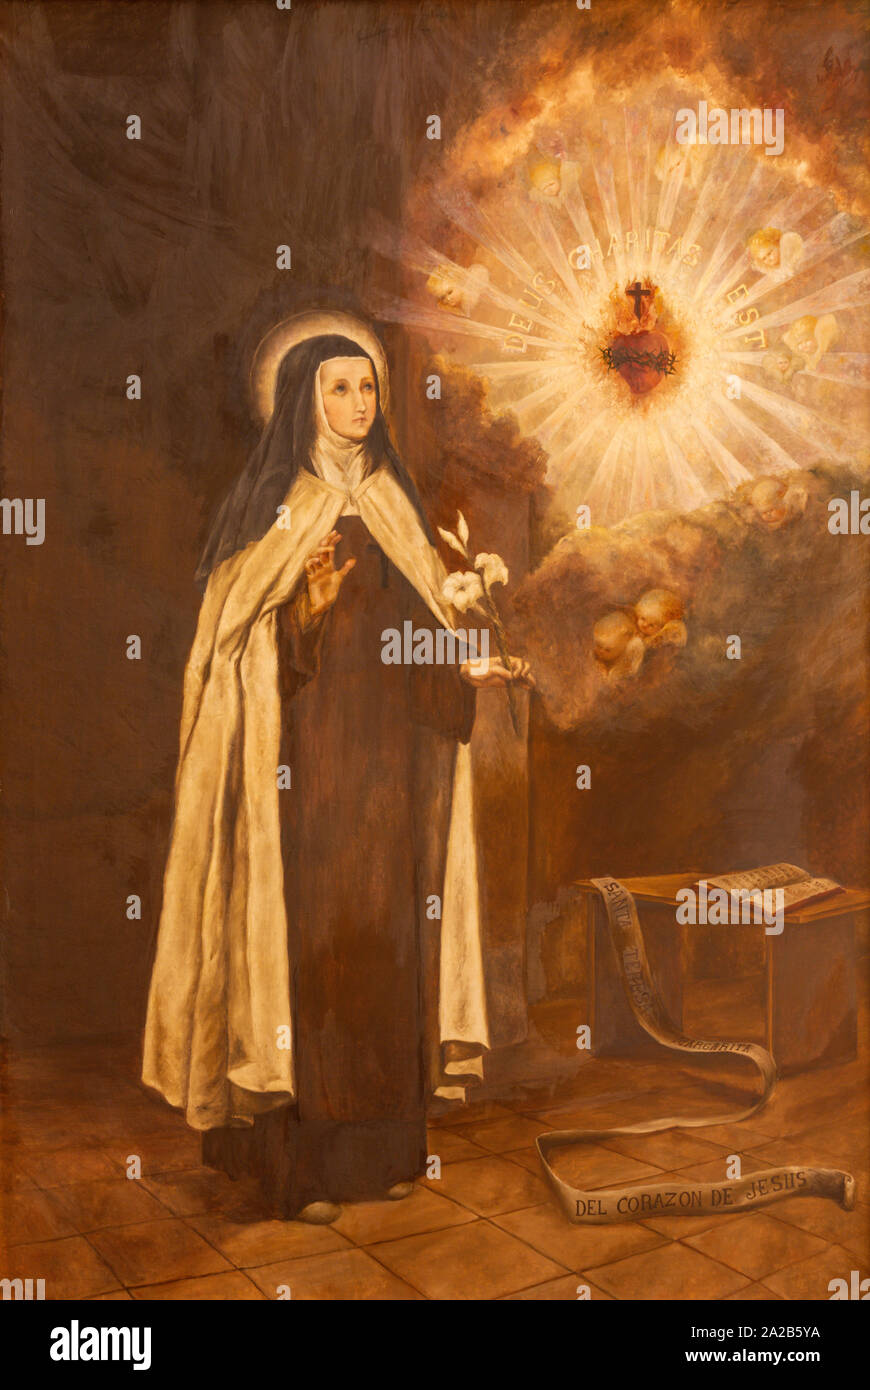 PALMA DE MALLORCA, SPANIEN - Januar 29, 2019: Die Malerei von St. Teresa von Avila in der Kirche Iglesia de Santa Maria Magdalena Stockfoto